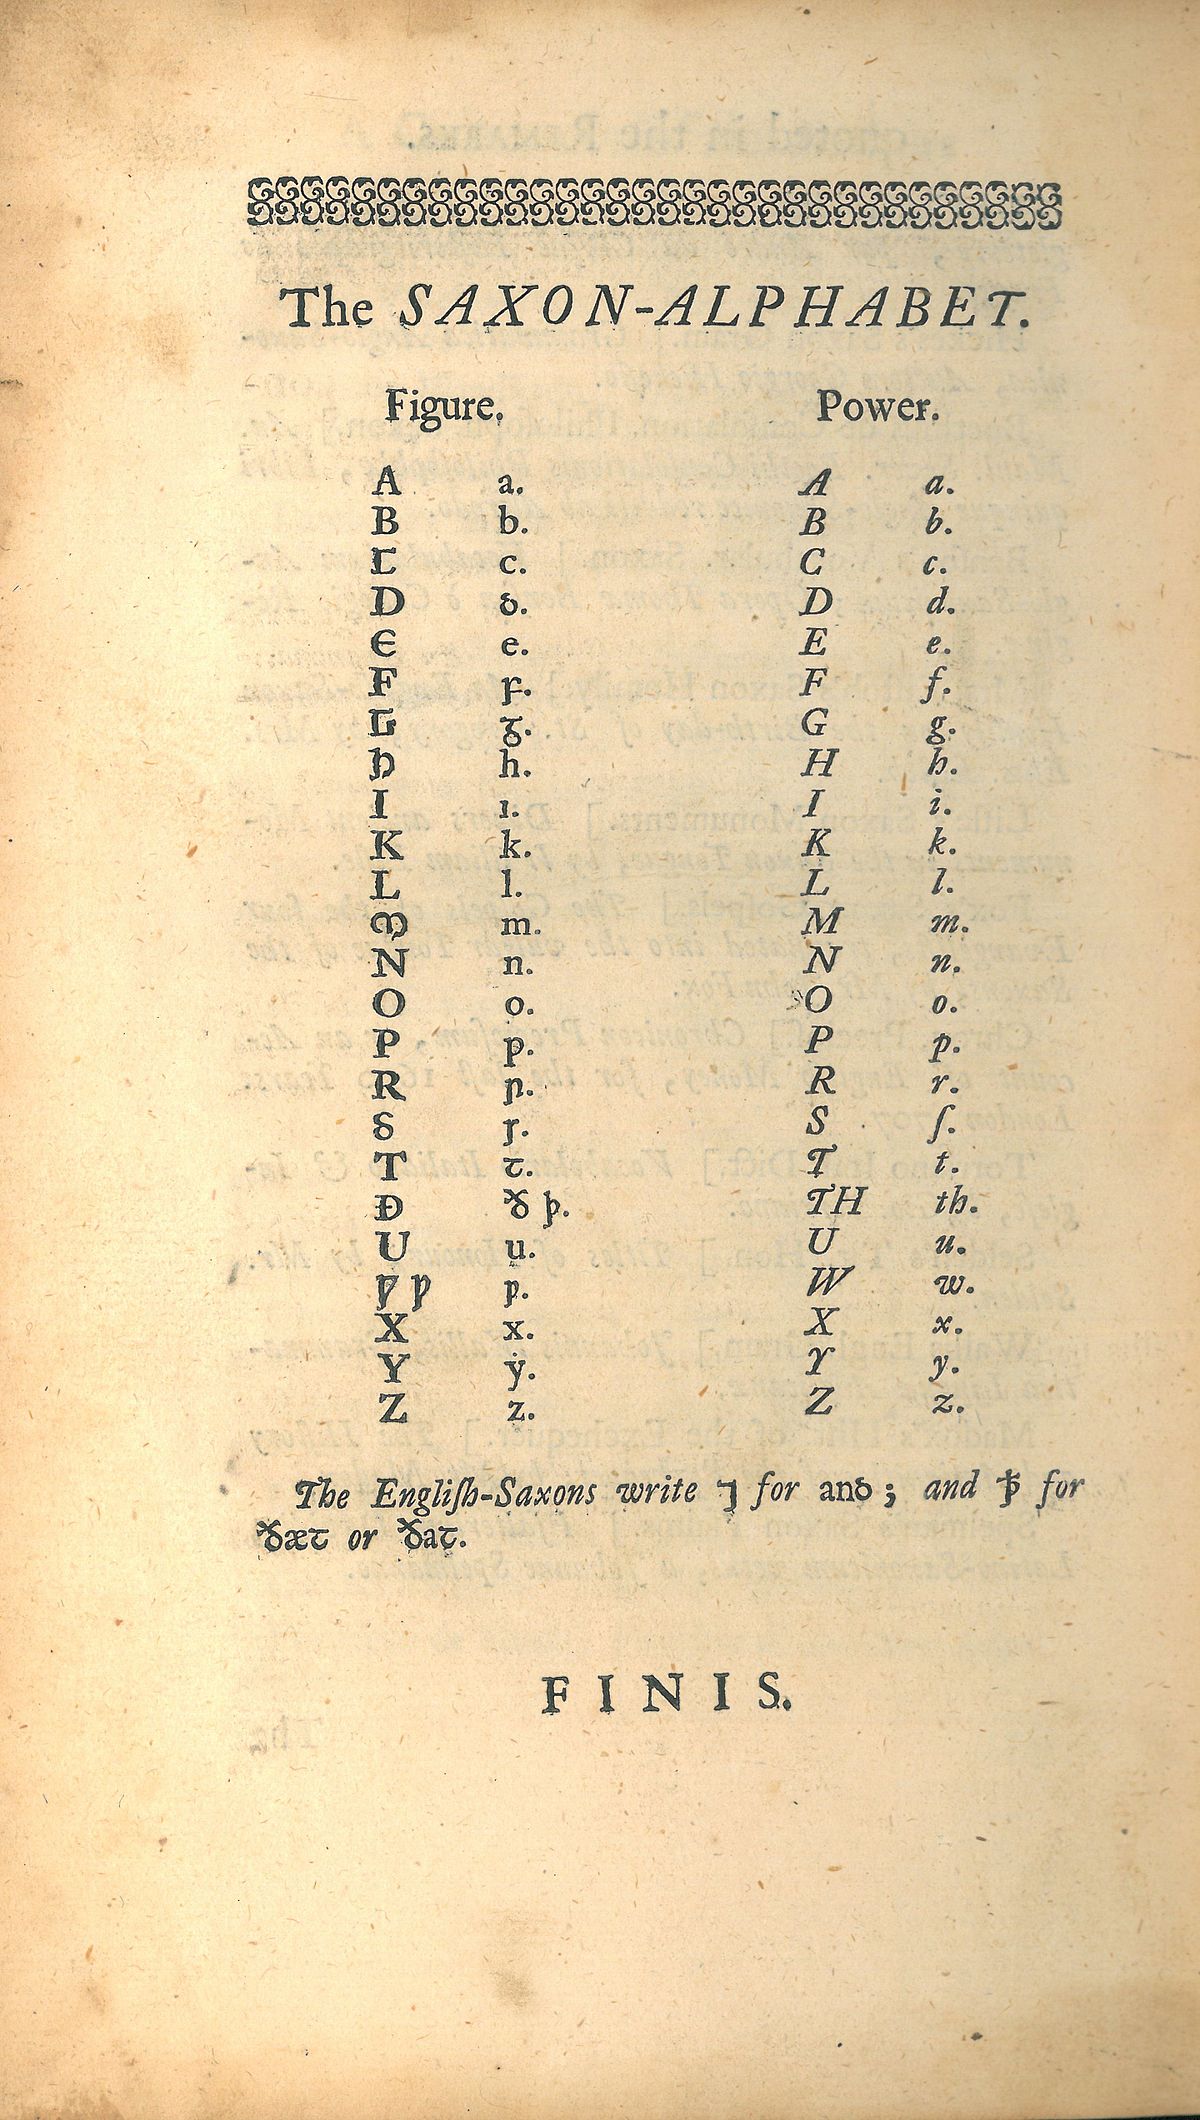 Old English Latin alphabet - Wikipedia